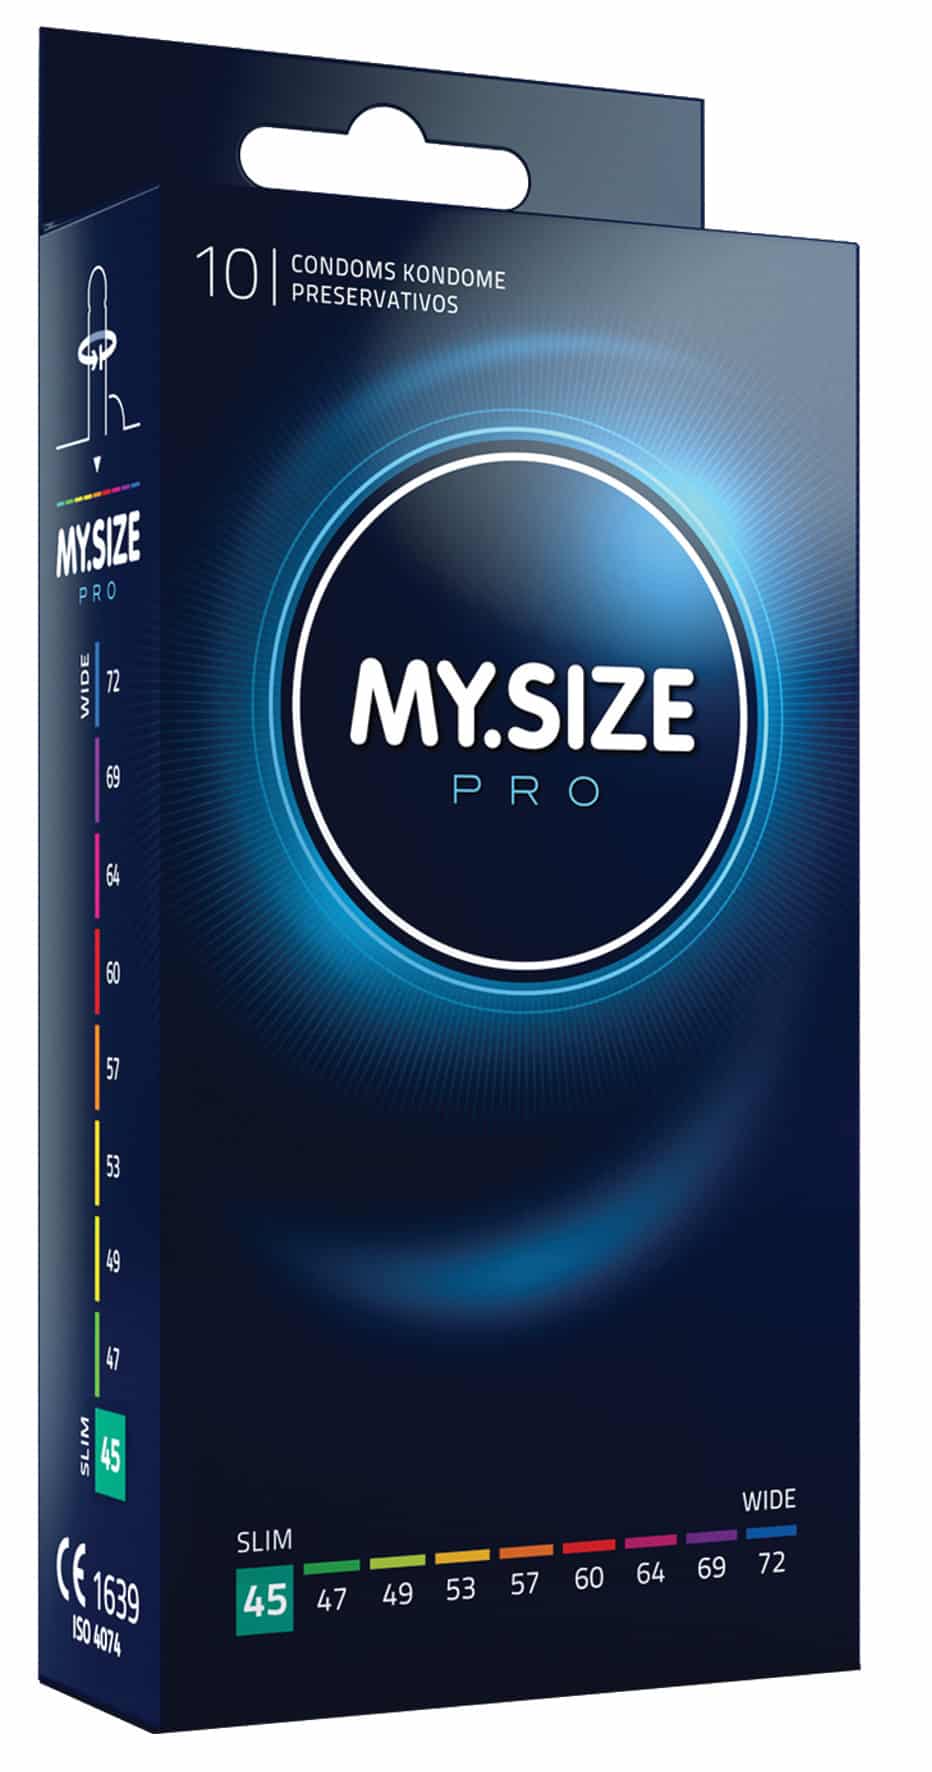 MY.SIZE PRO 45 (10 Kondome)